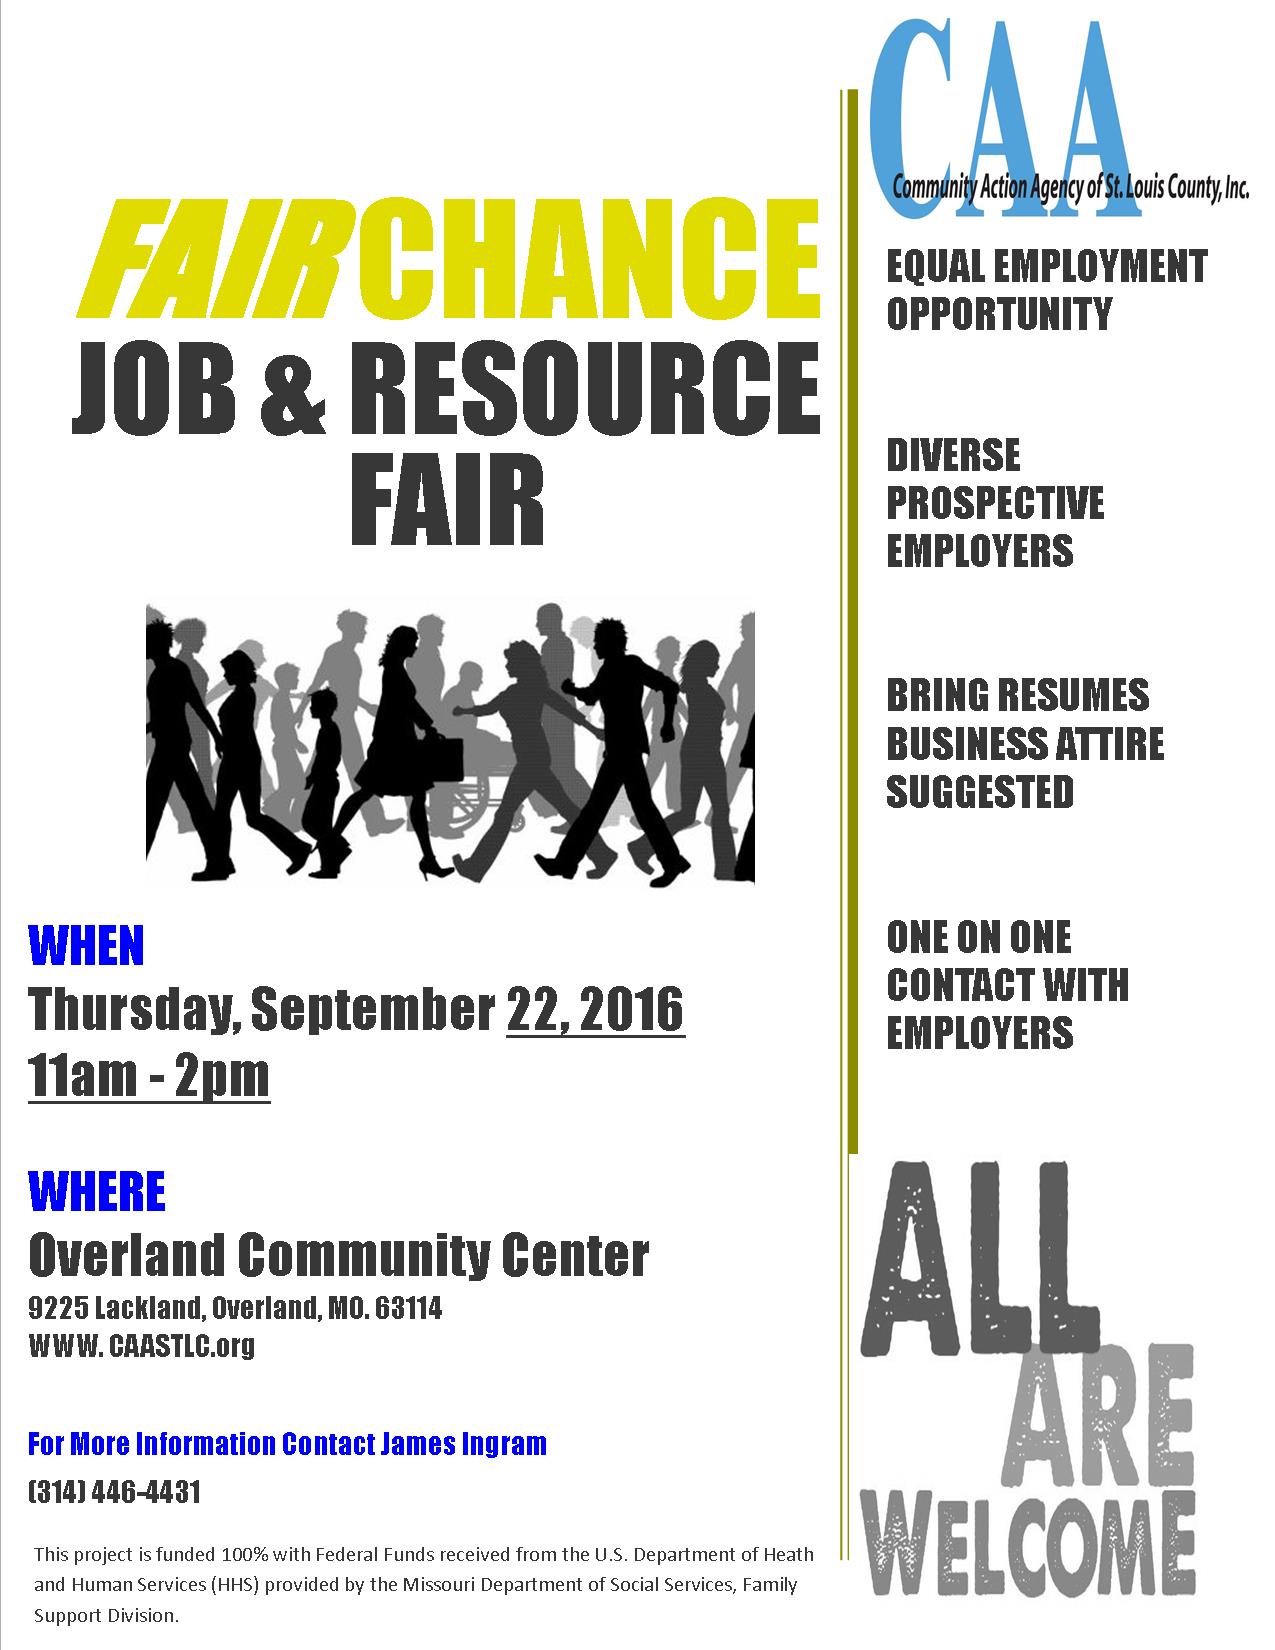 Fair Chance Job Fair Flyer 2016